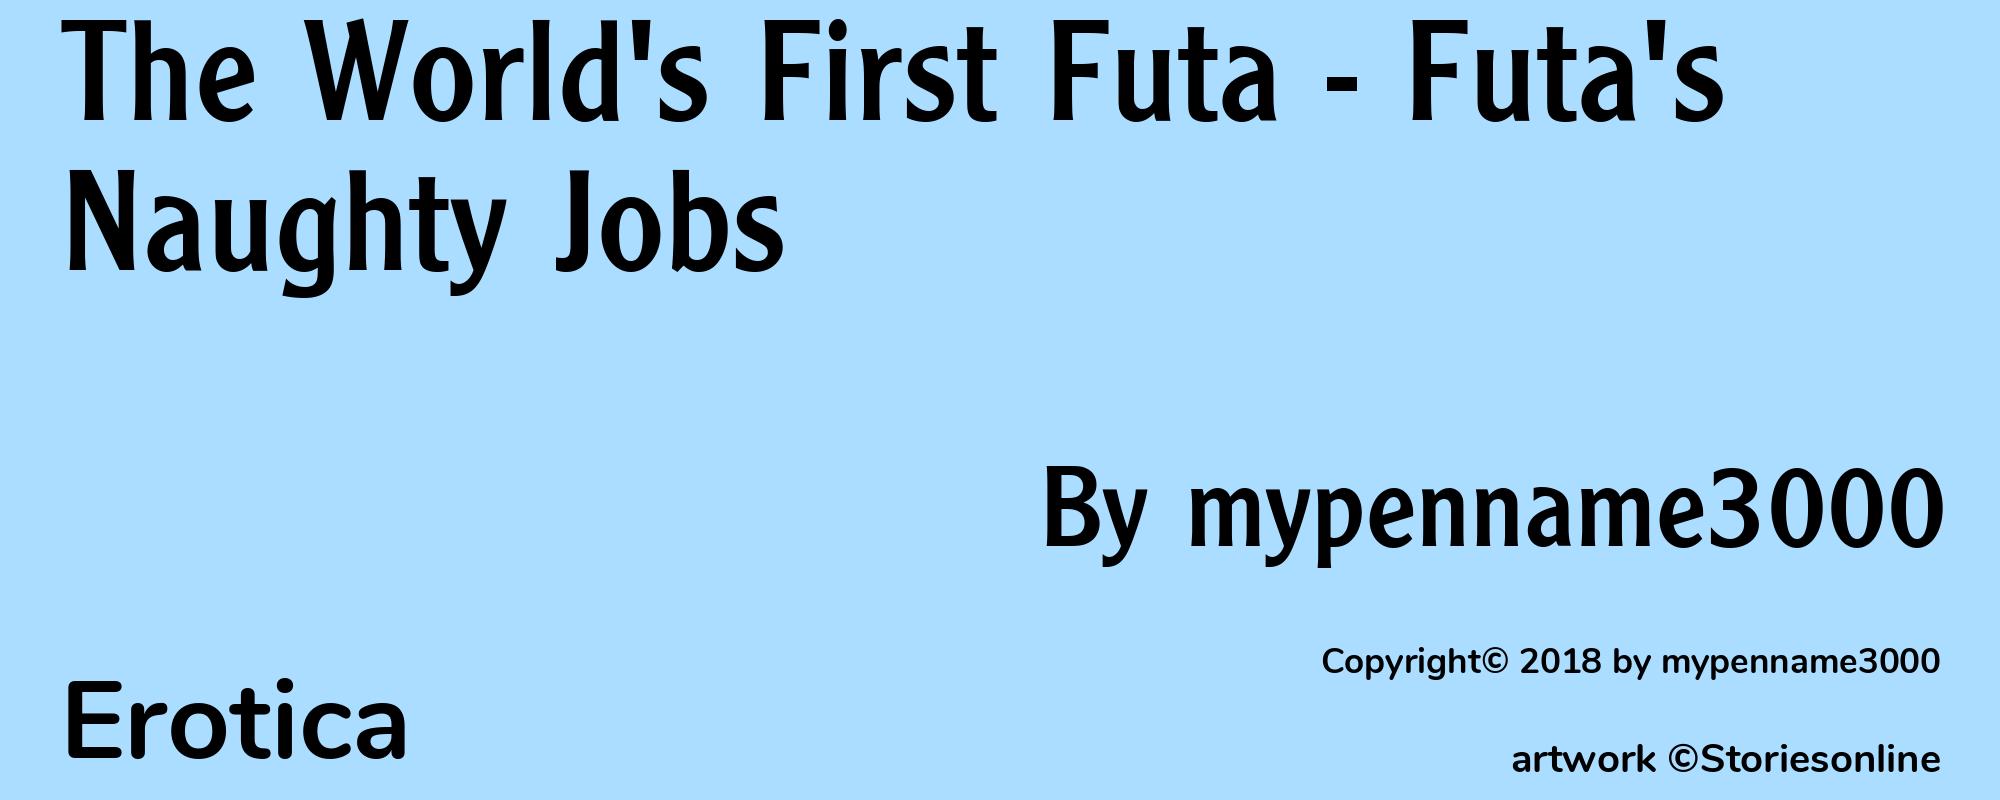 The World's First Futa - Futa's Naughty Jobs - Cover